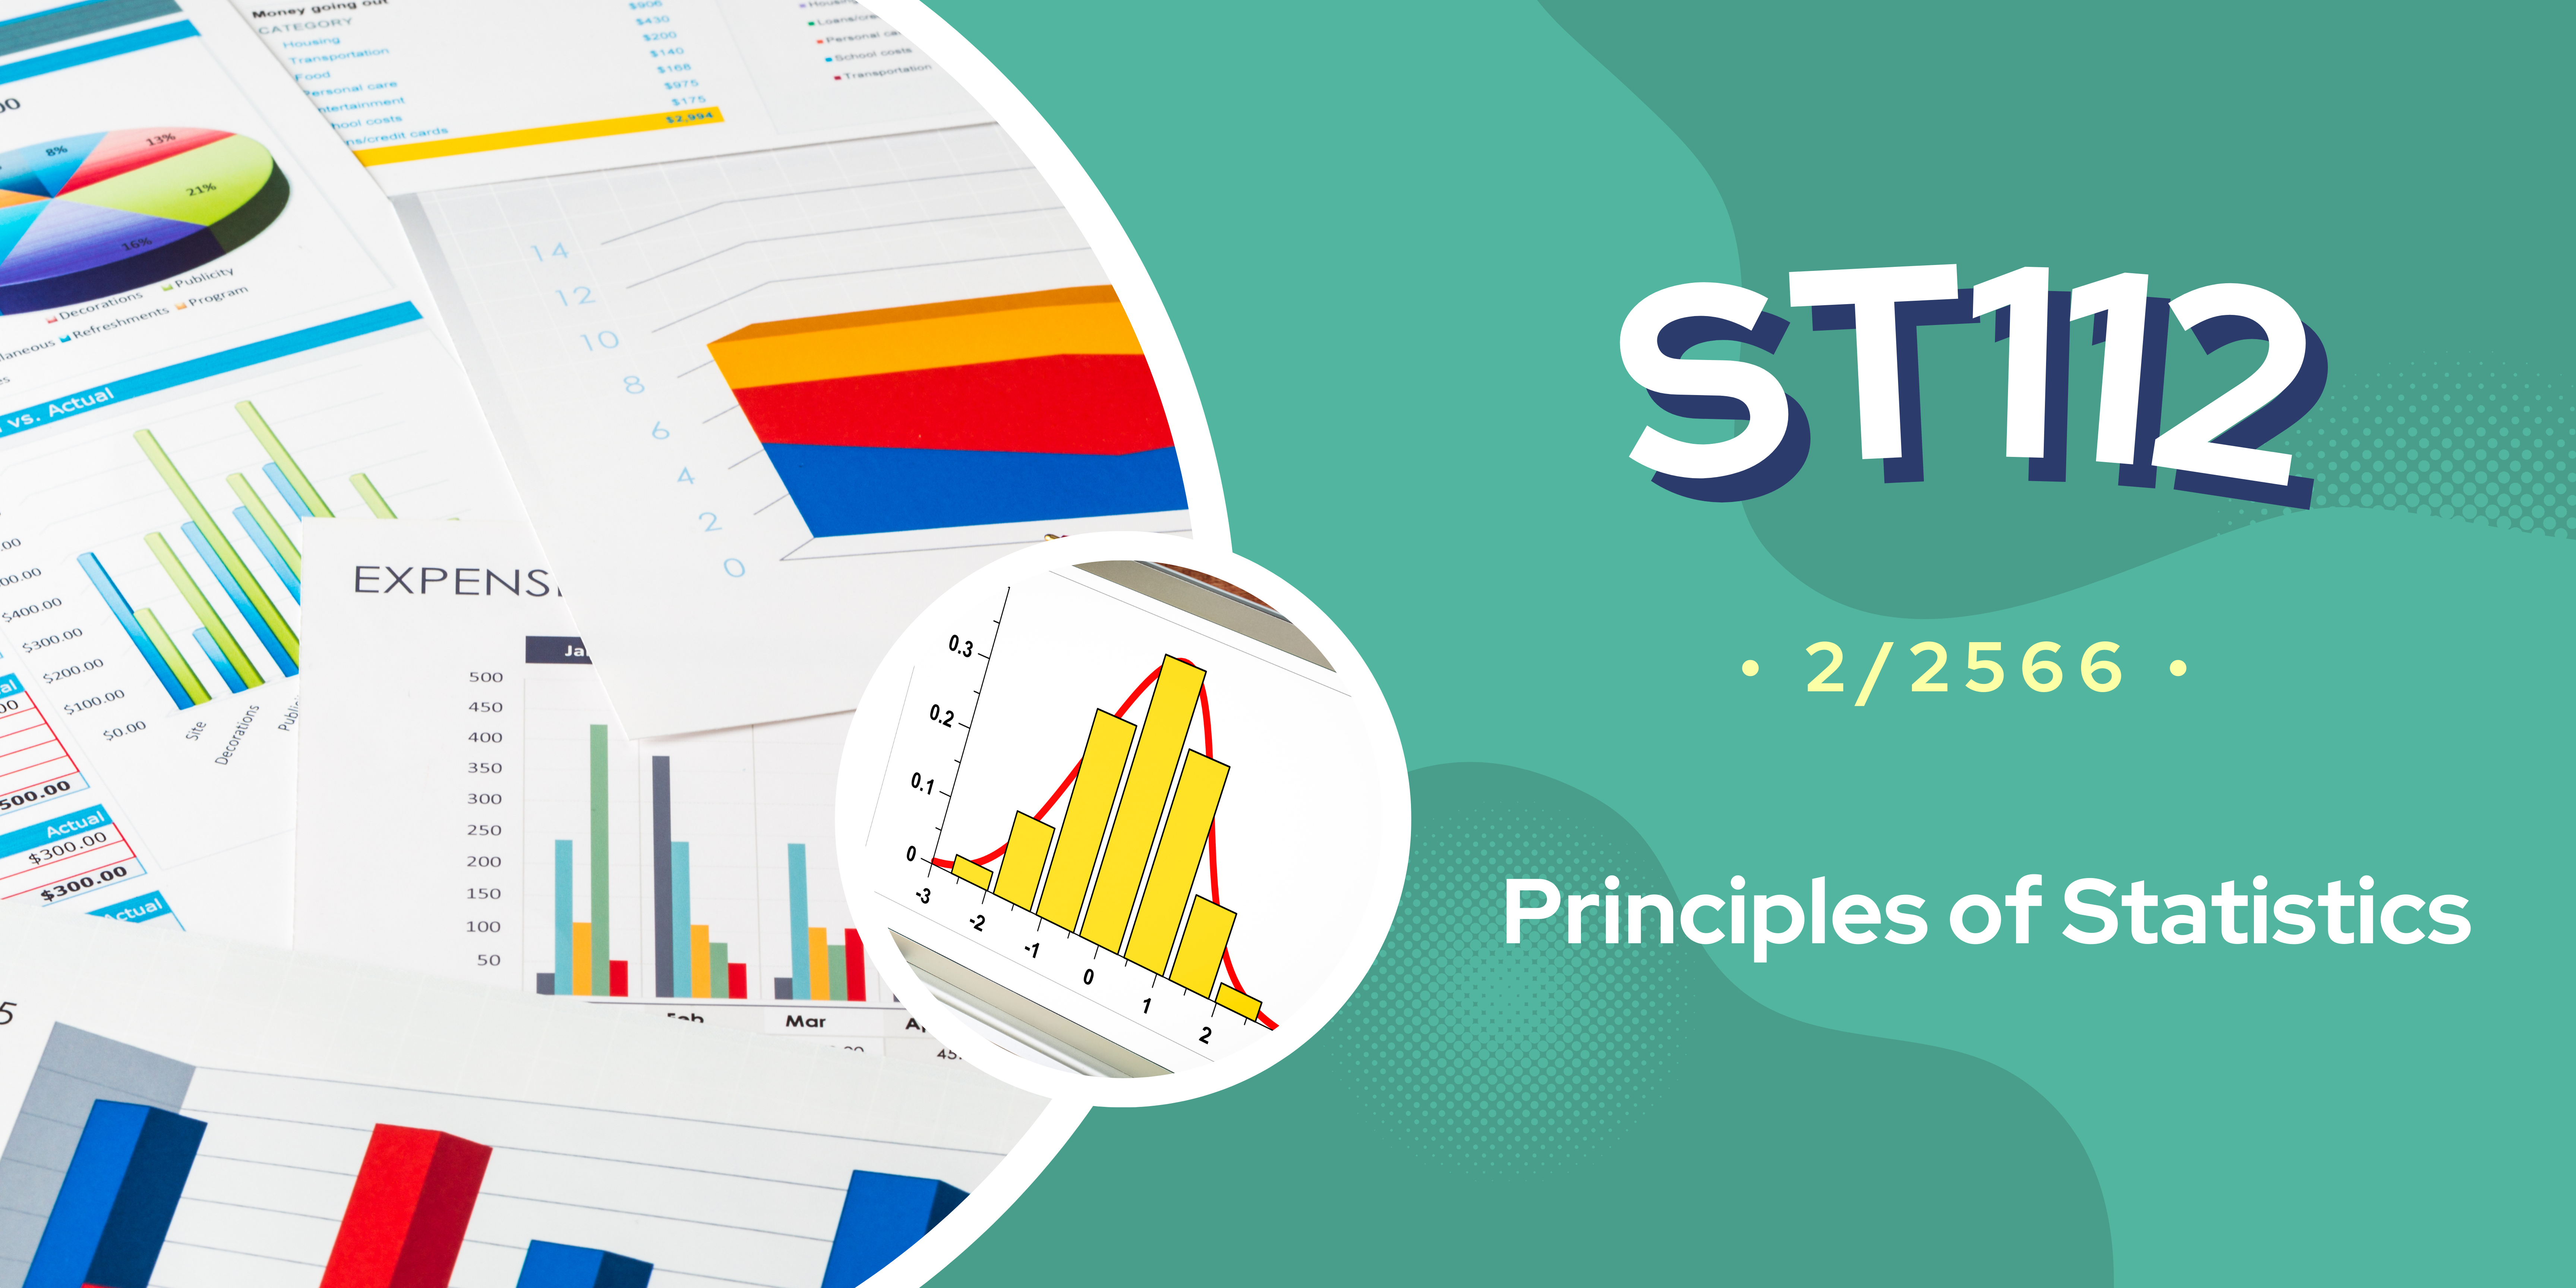 ST112 Principles of Statistics (2/2566)  